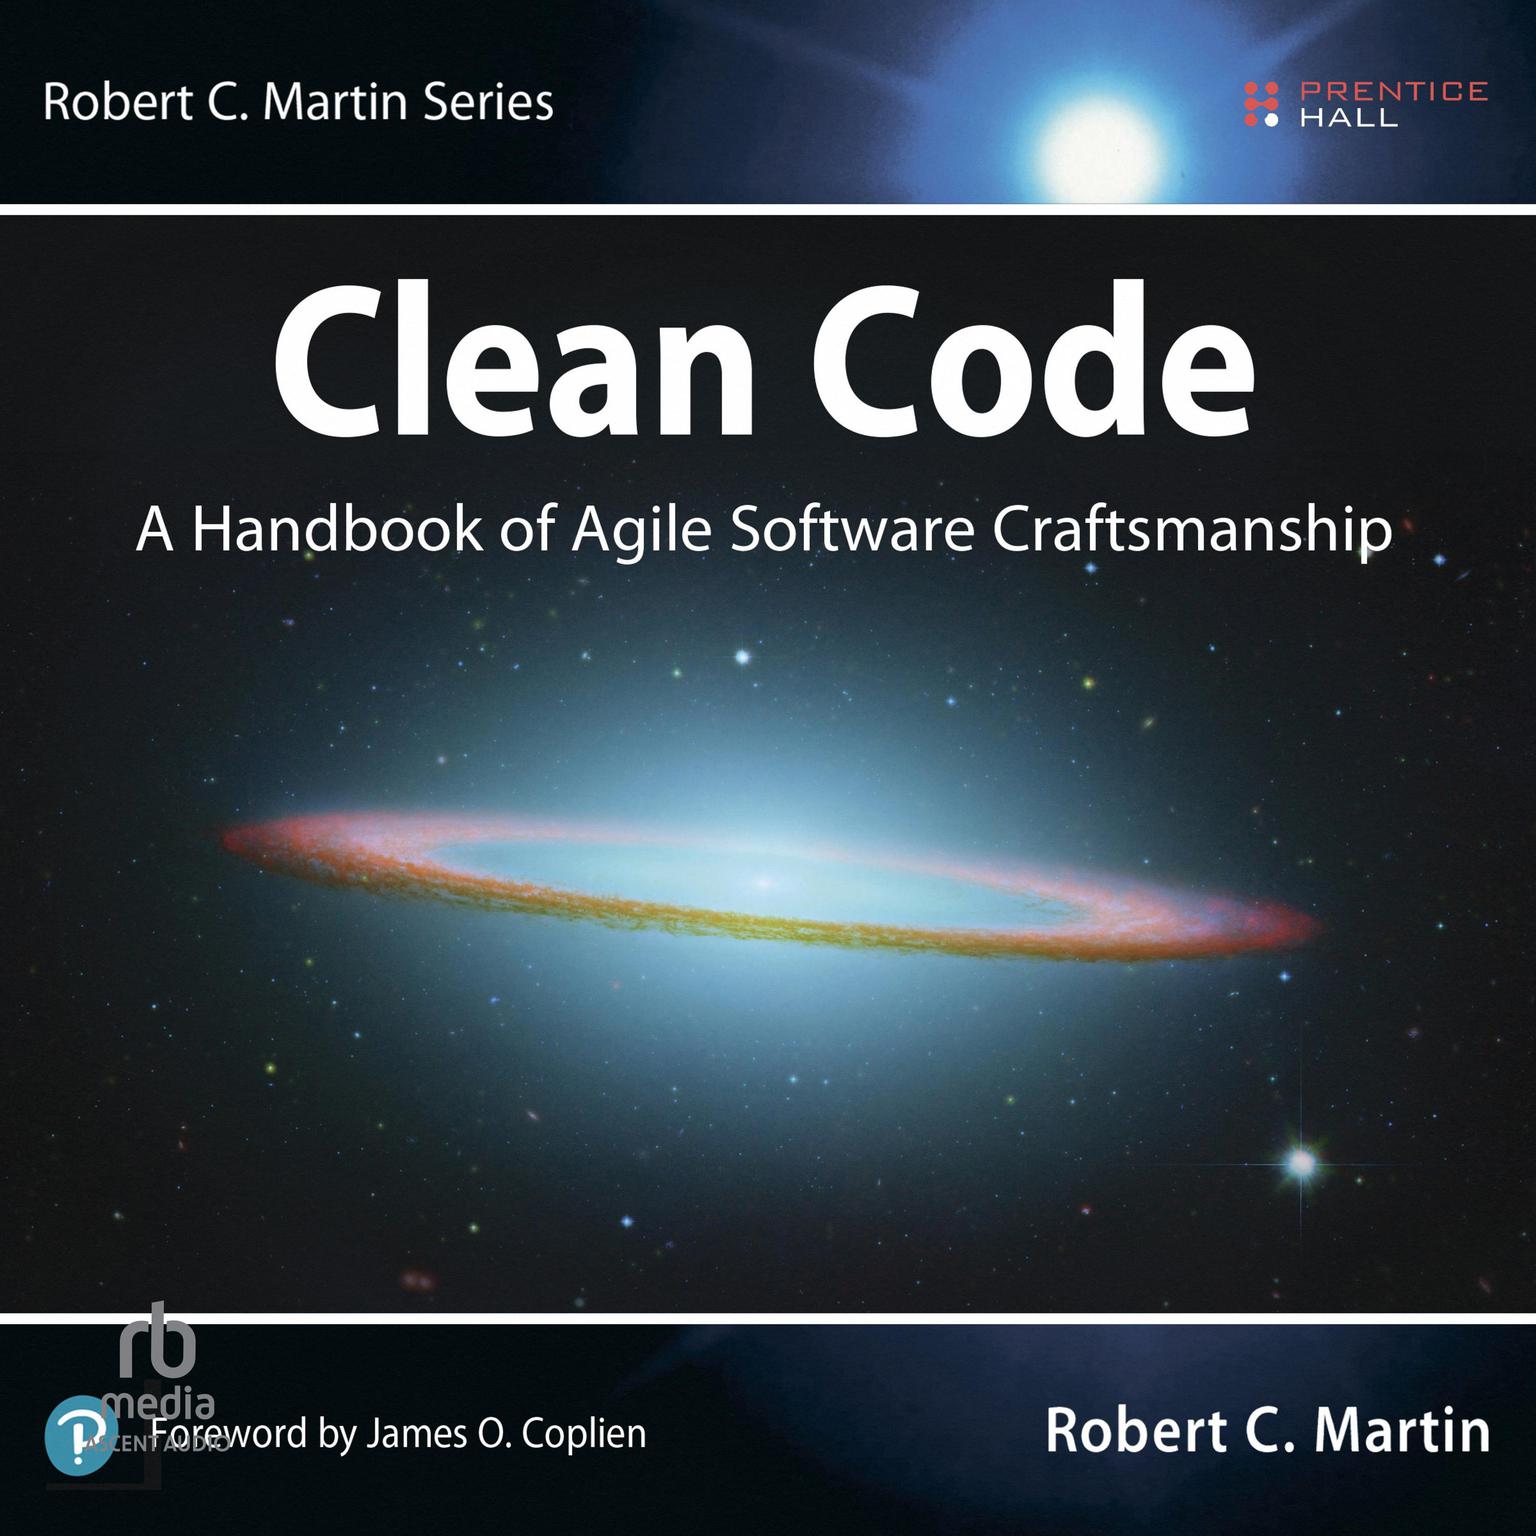 Clean Code: A Handbook of Agile Software Craftsmanship Audiobook, by Robert C. Martin